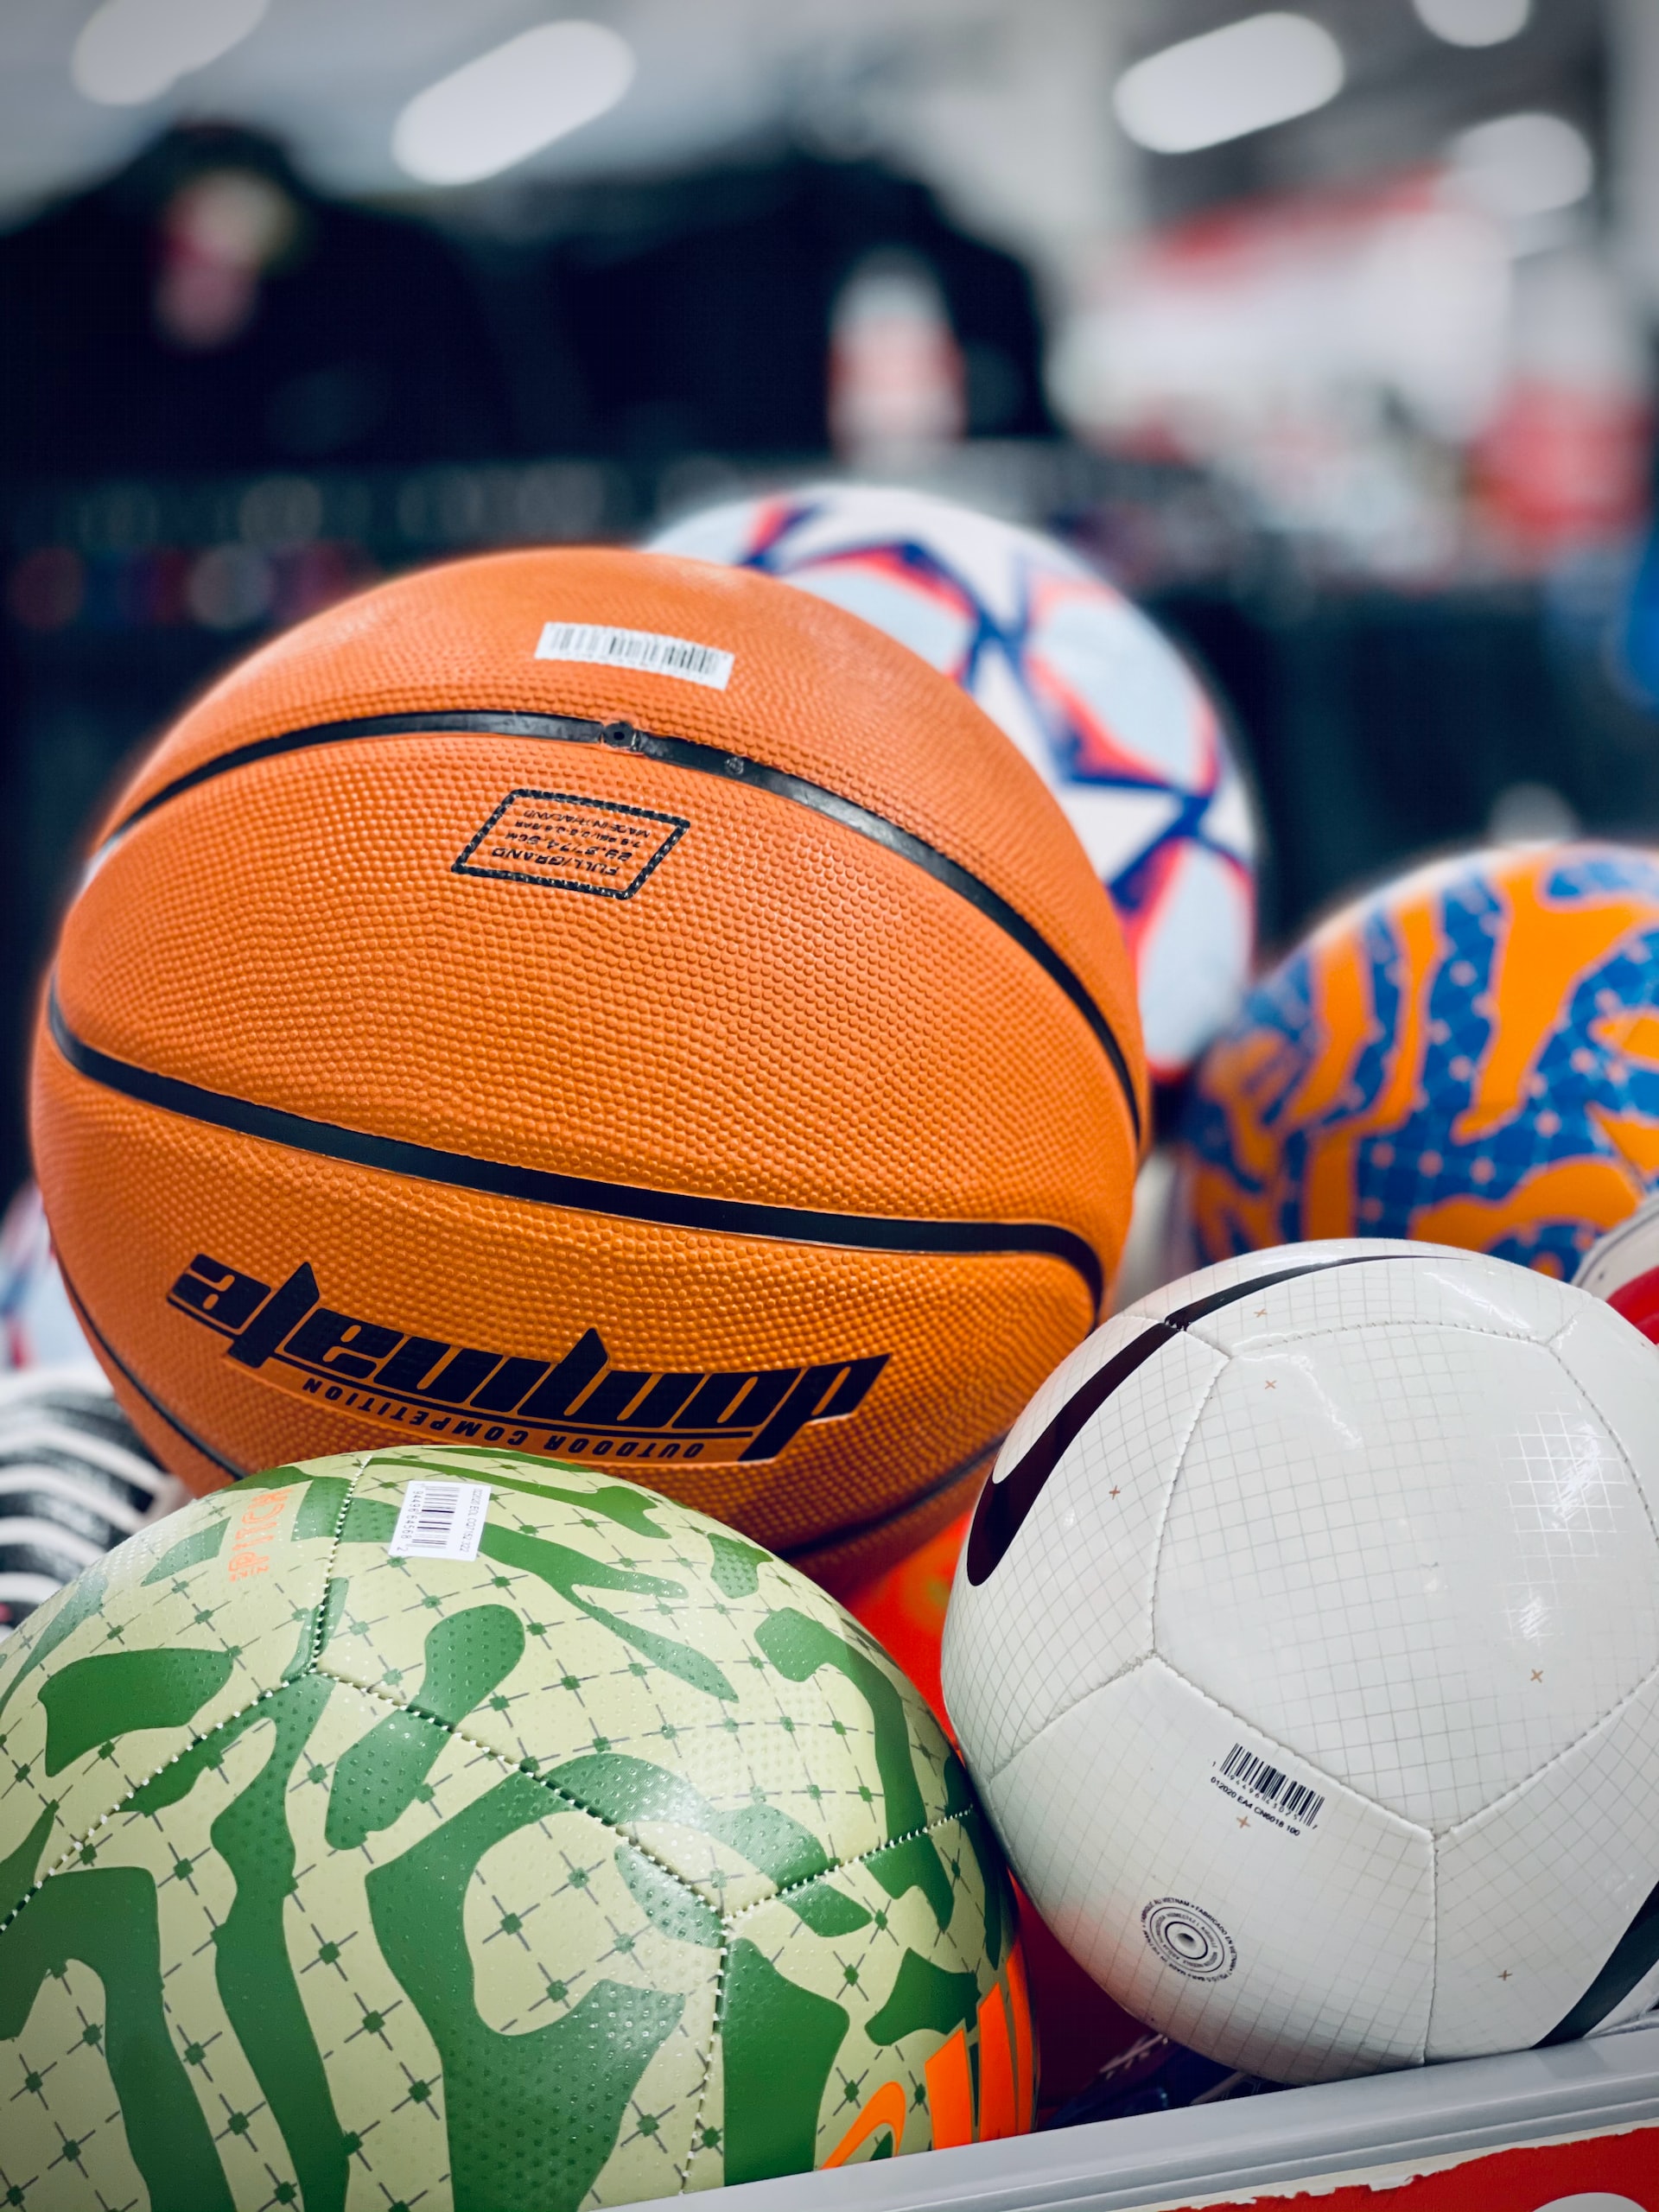 Basketball Balls on Display at Decathlon Sport Warehouse Store